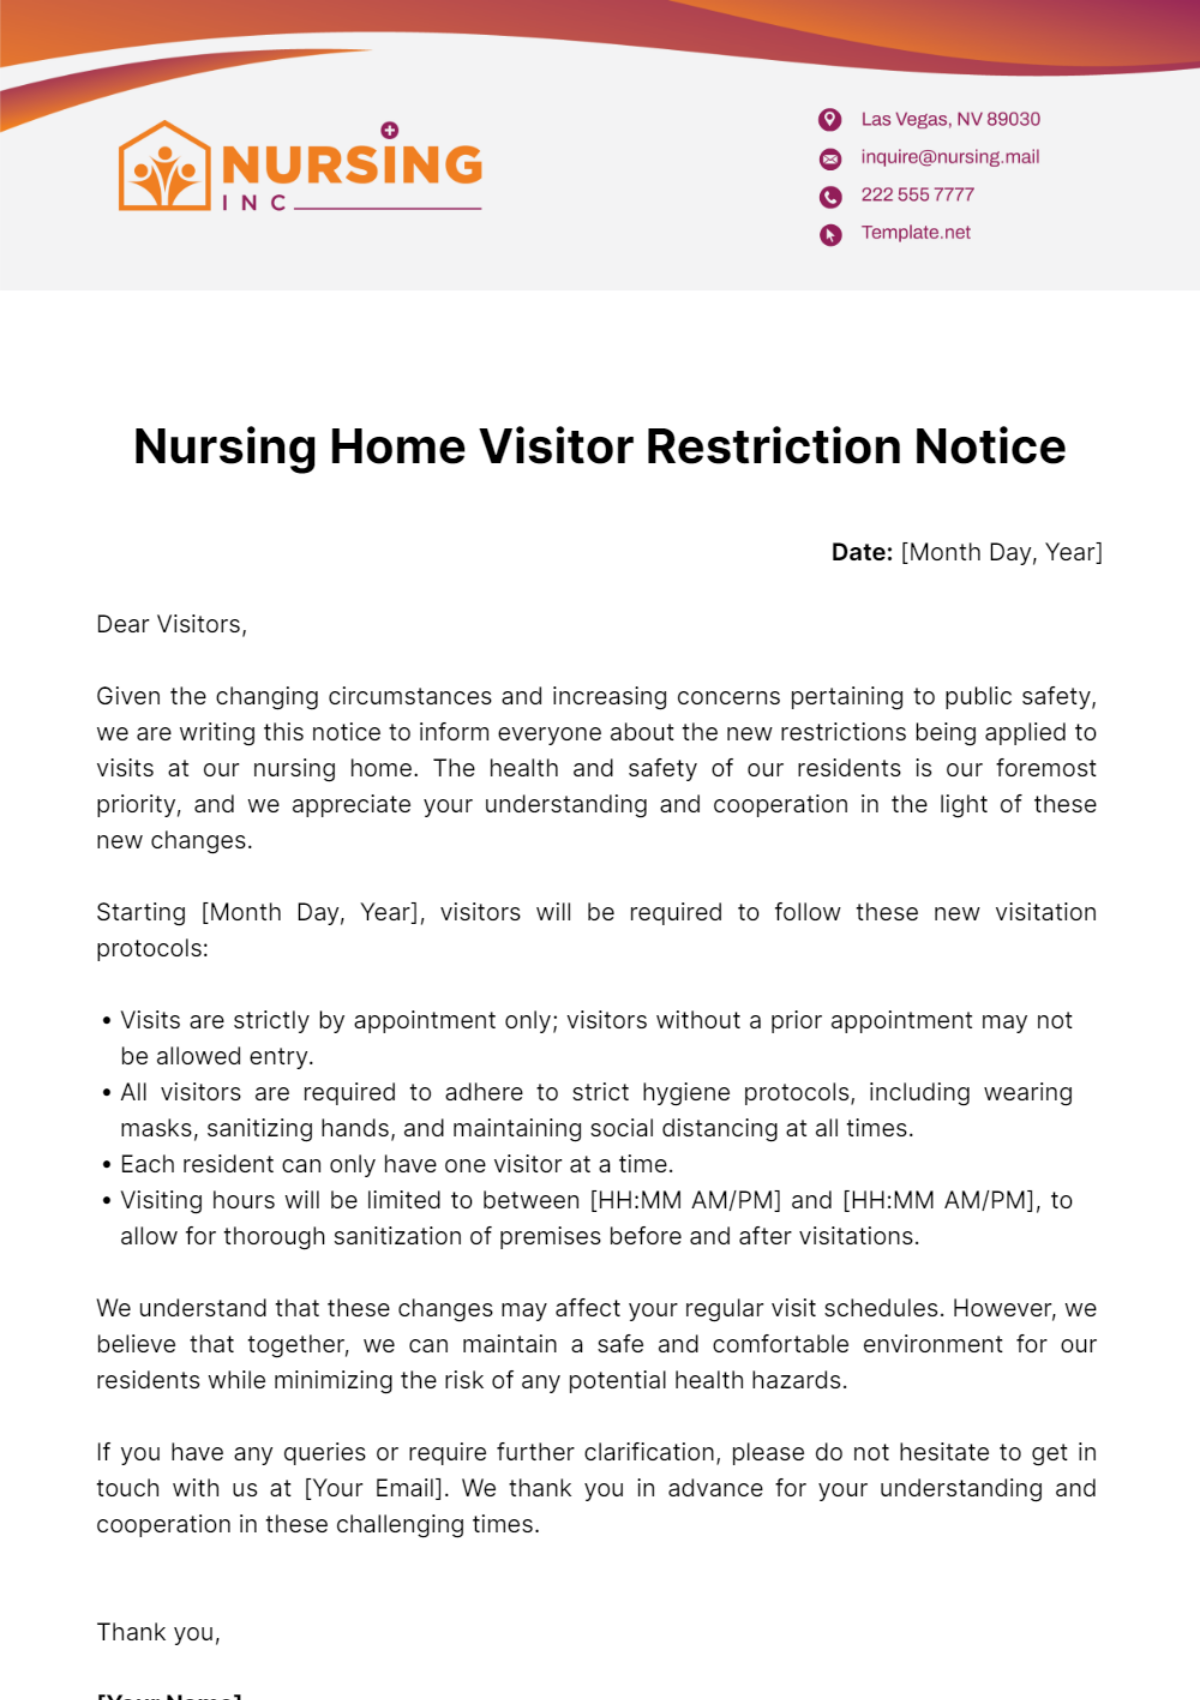 Nursing Home Visitor Restriction Notice Template